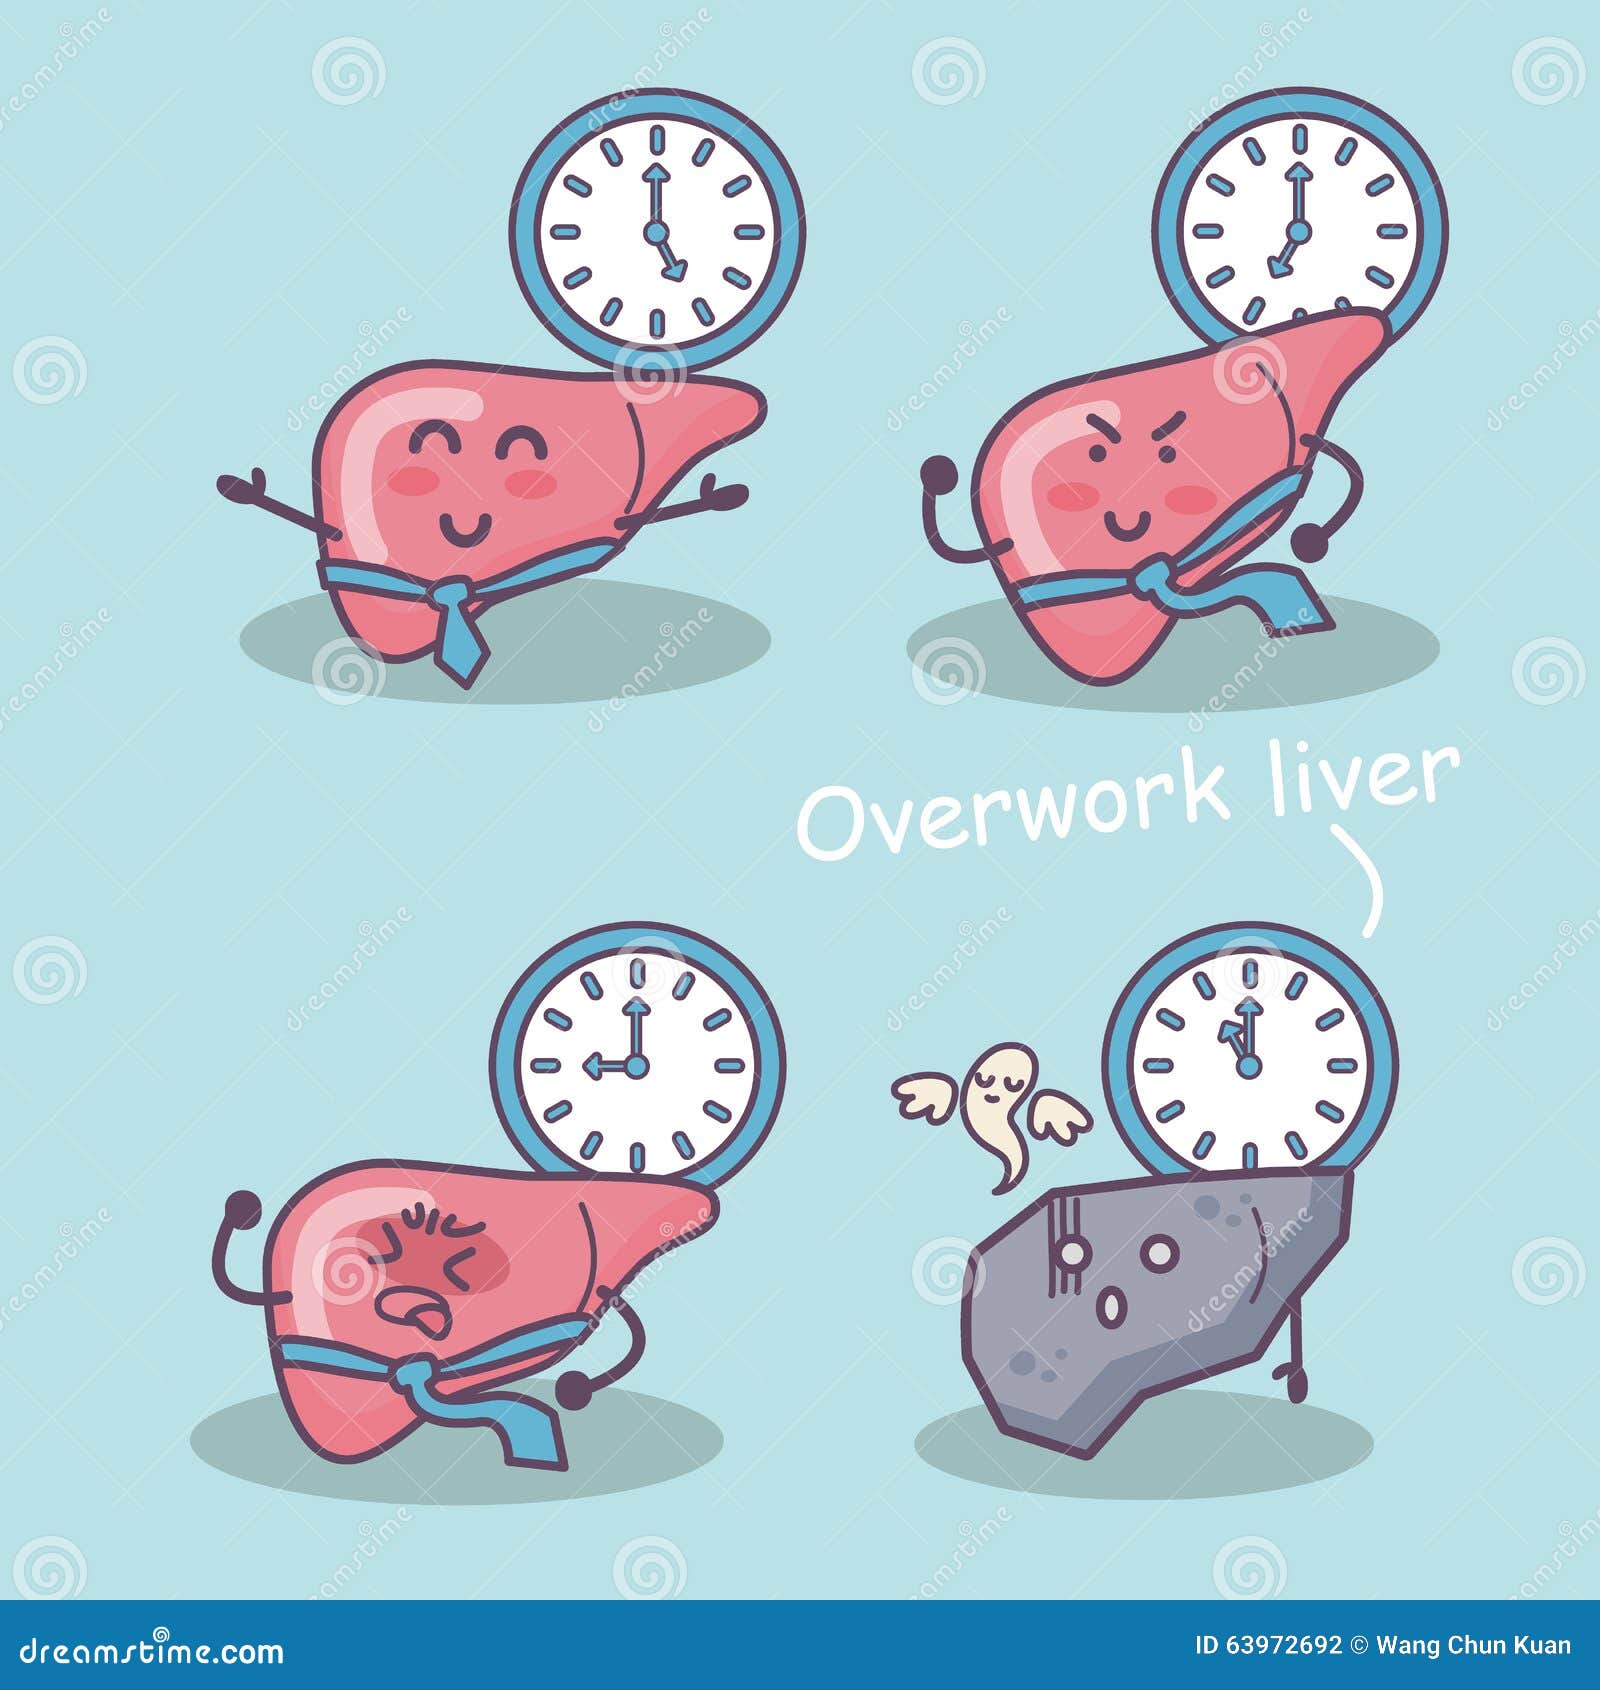 overwork liver